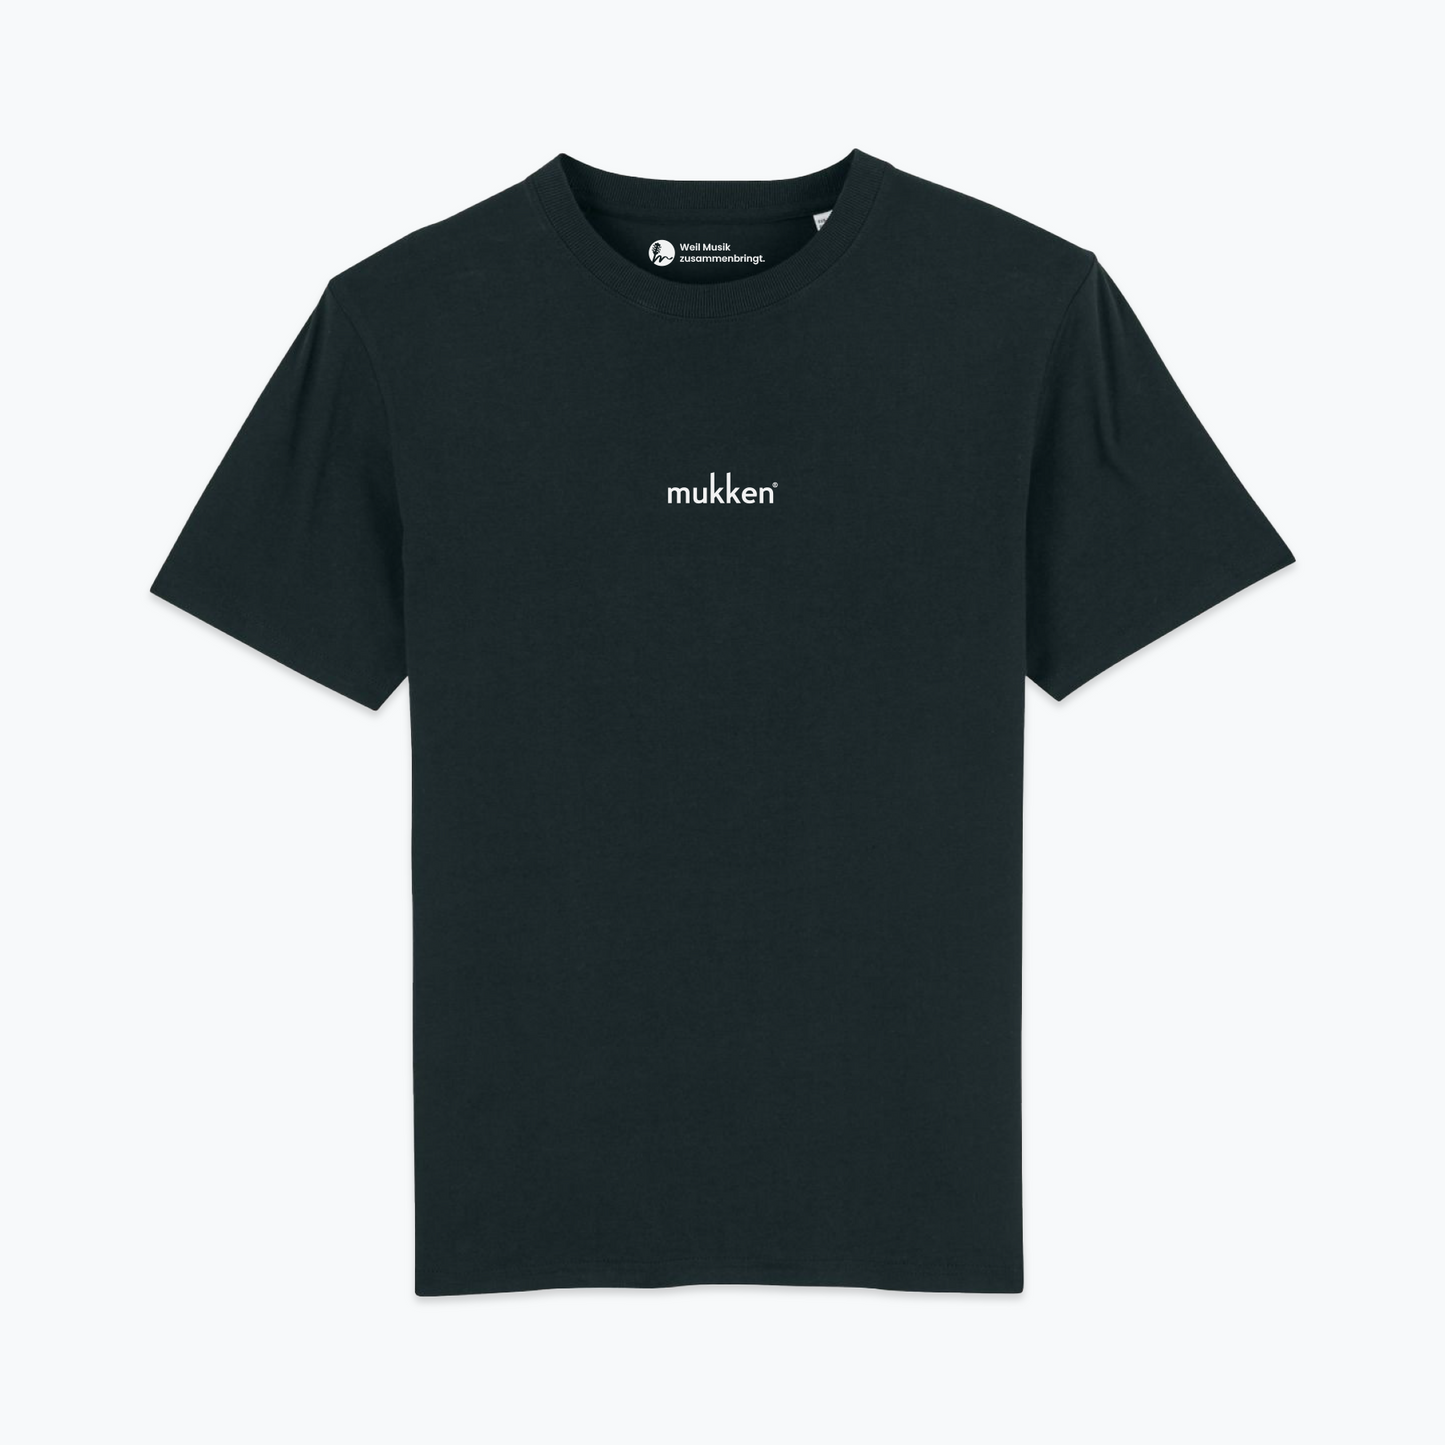 mukken T-Shirt schwarz